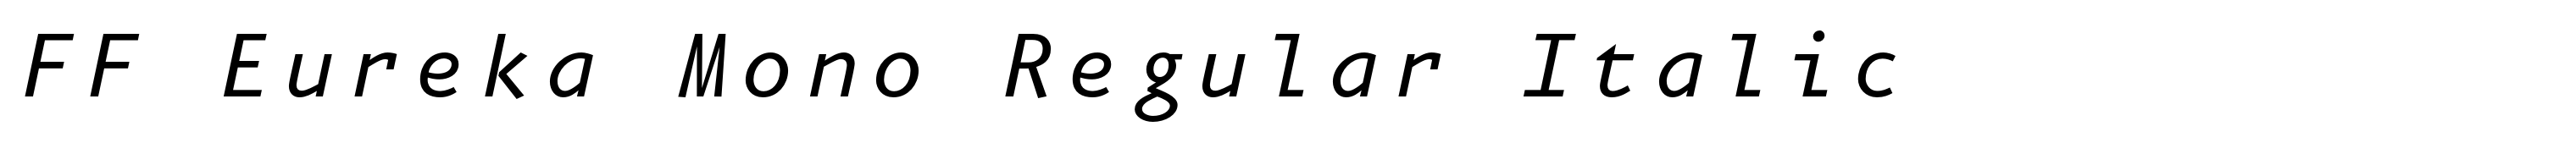 FF Eureka Mono Regular Italic